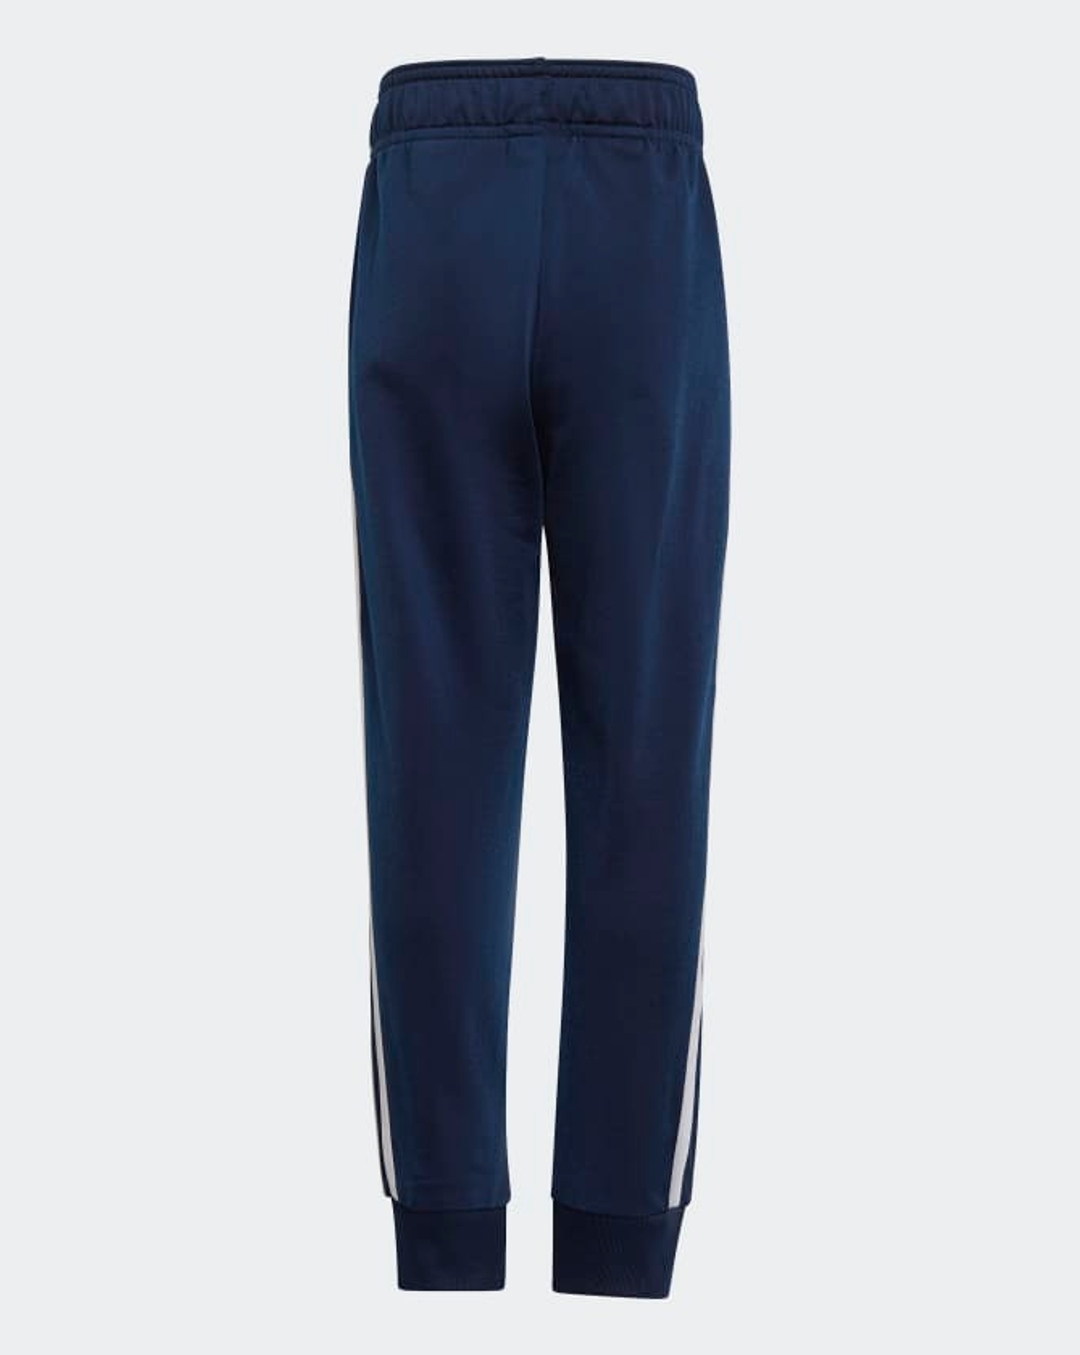 adidas Originals SPRT tricot track pants in blue and orange